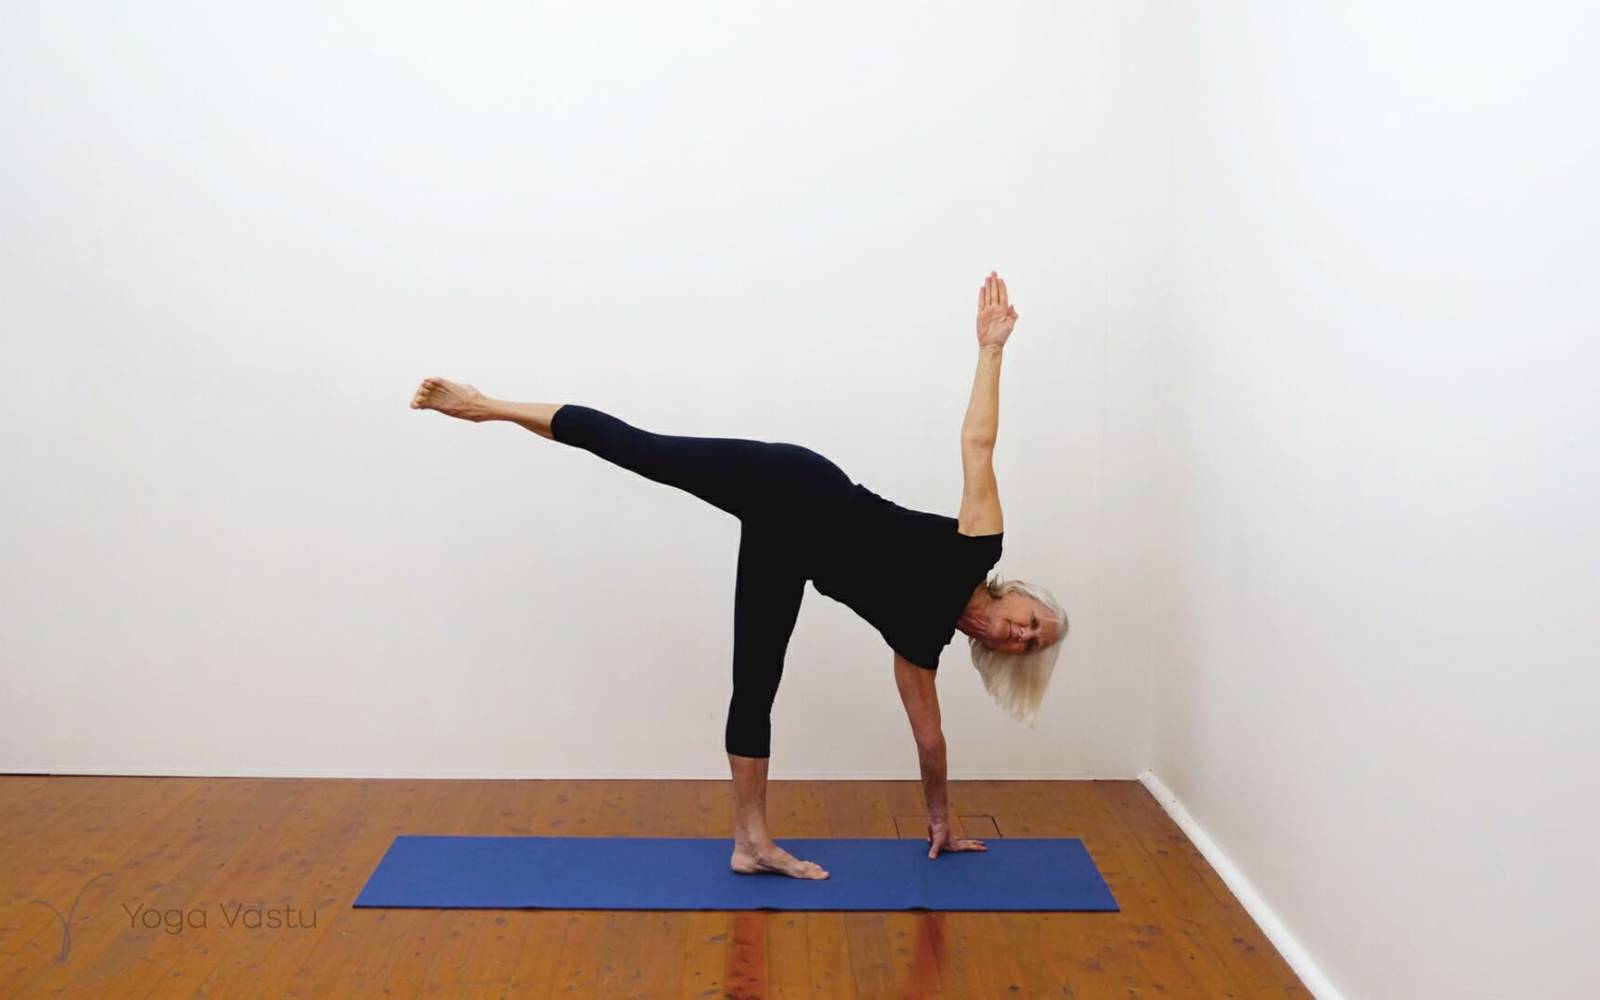 How to Do Pyramid - Yoga with Rona